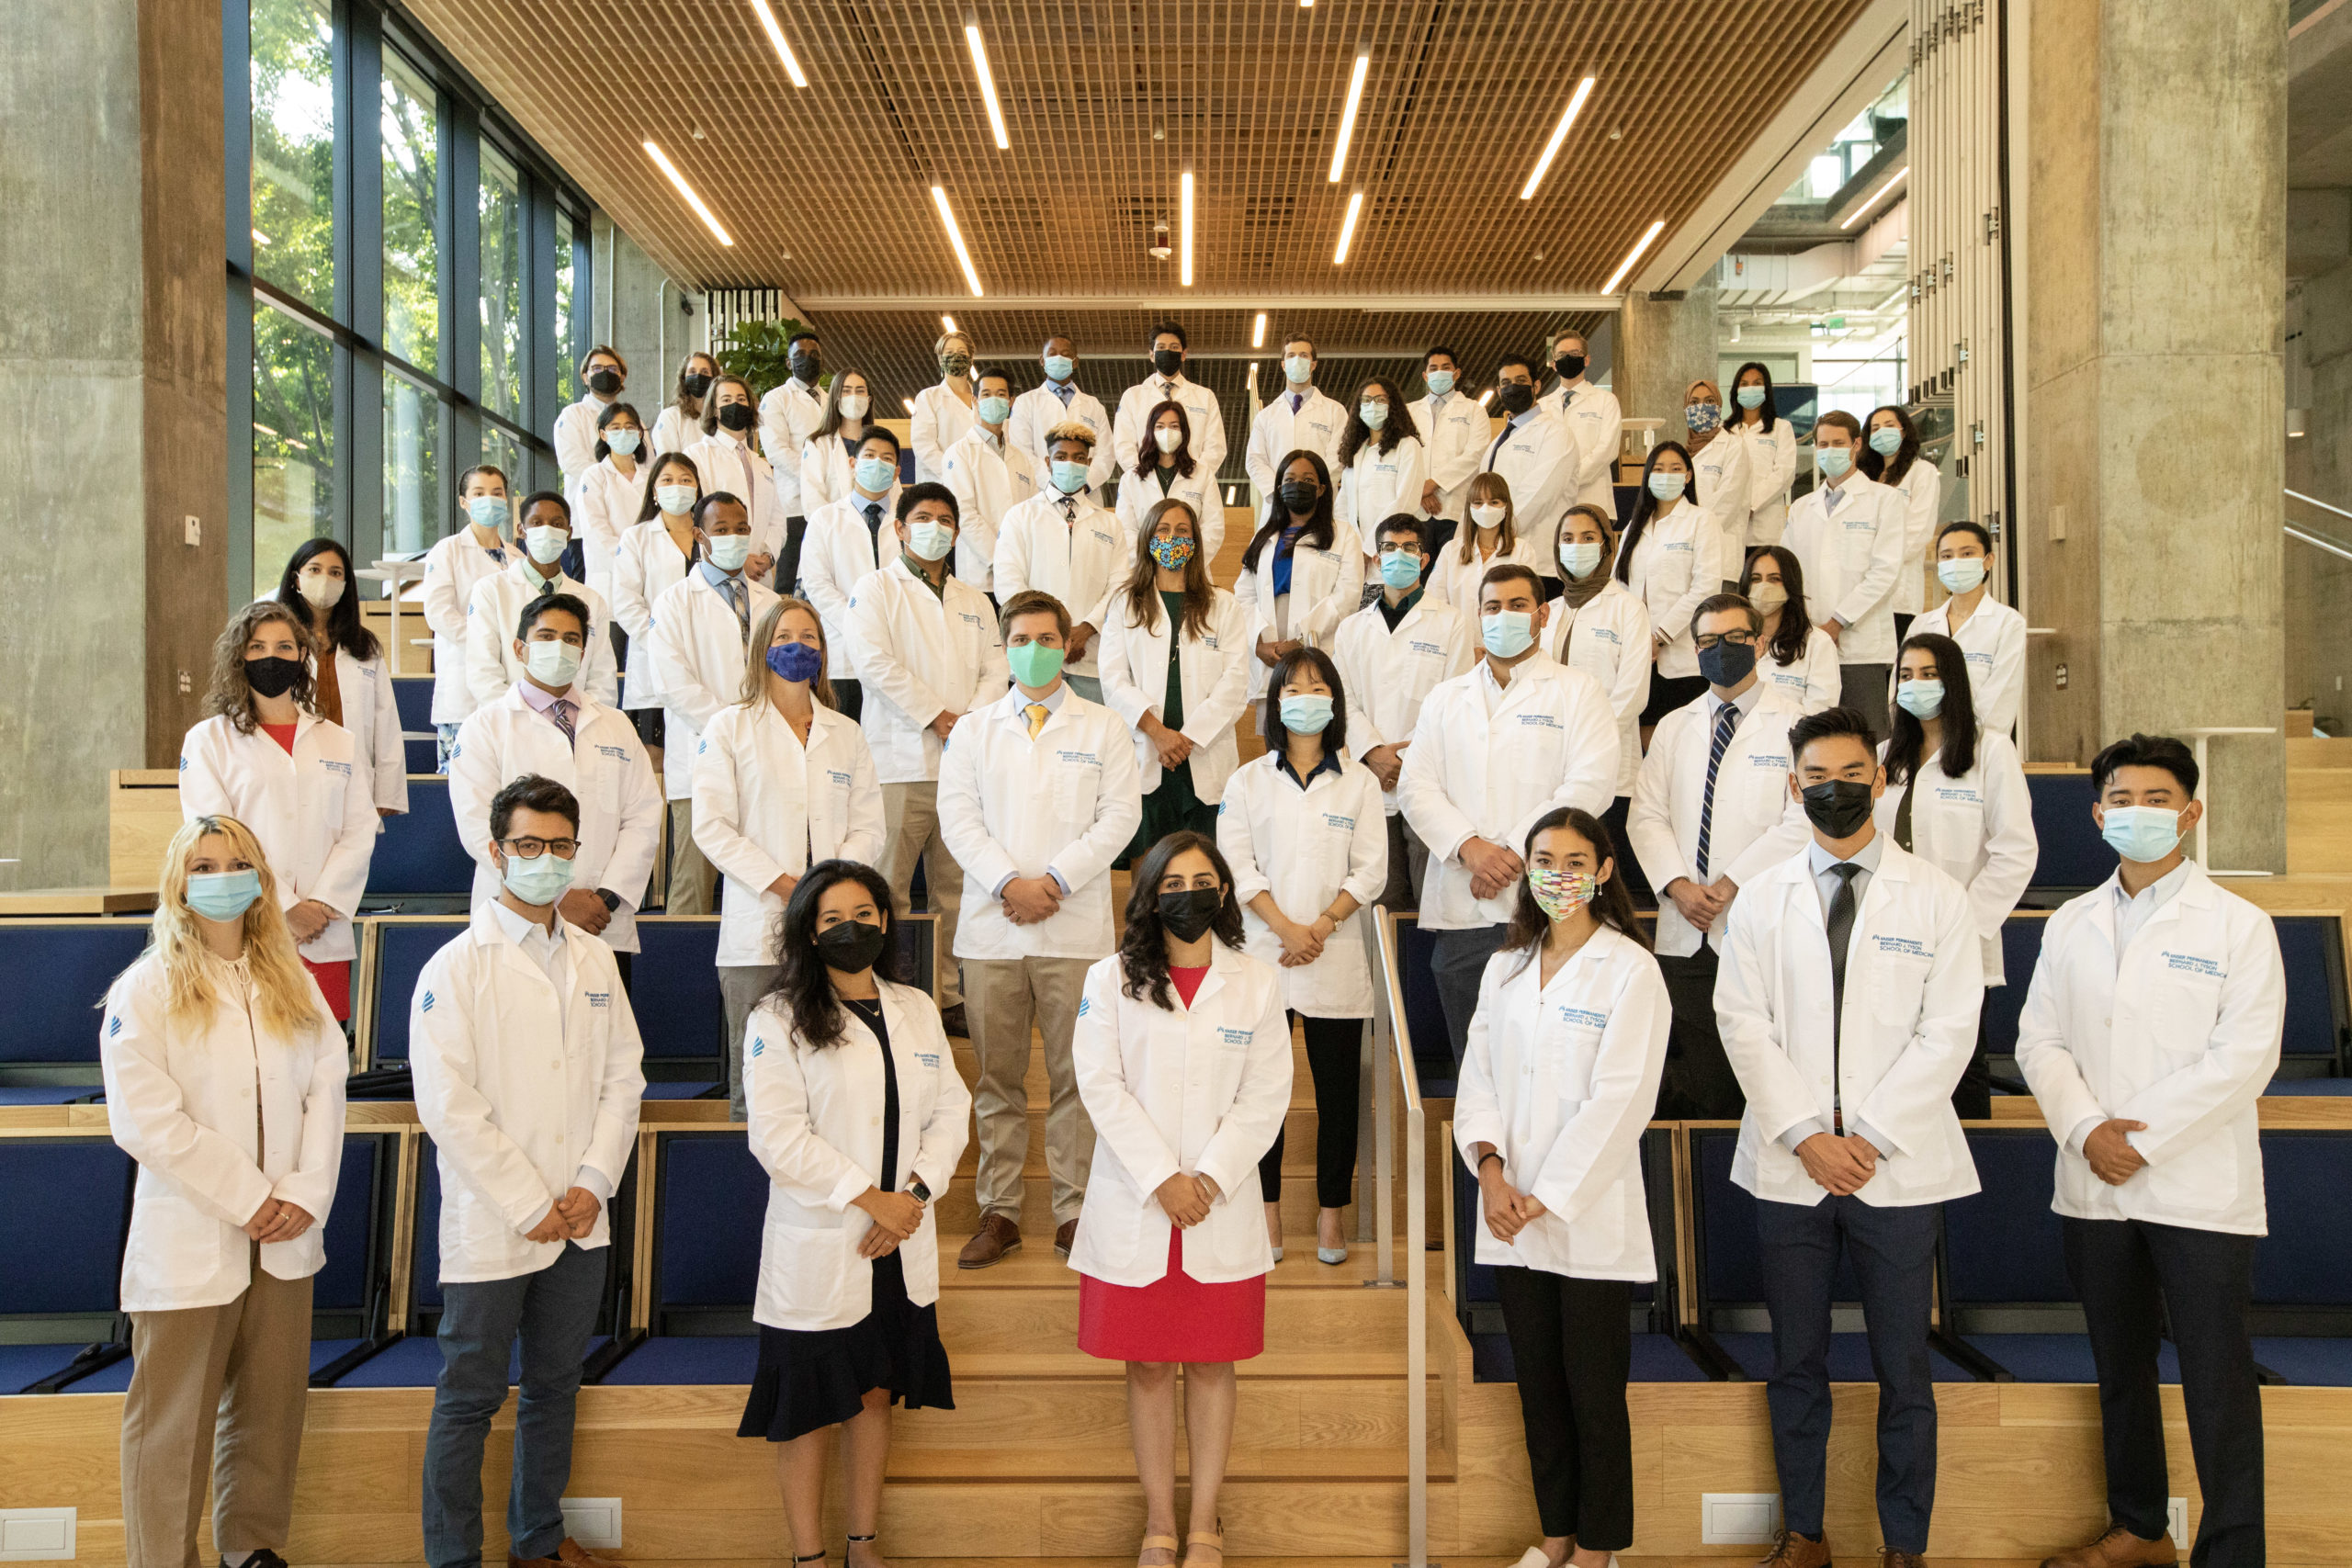 Kaiser Permanente's school of medicine students pose for white coat ceremony